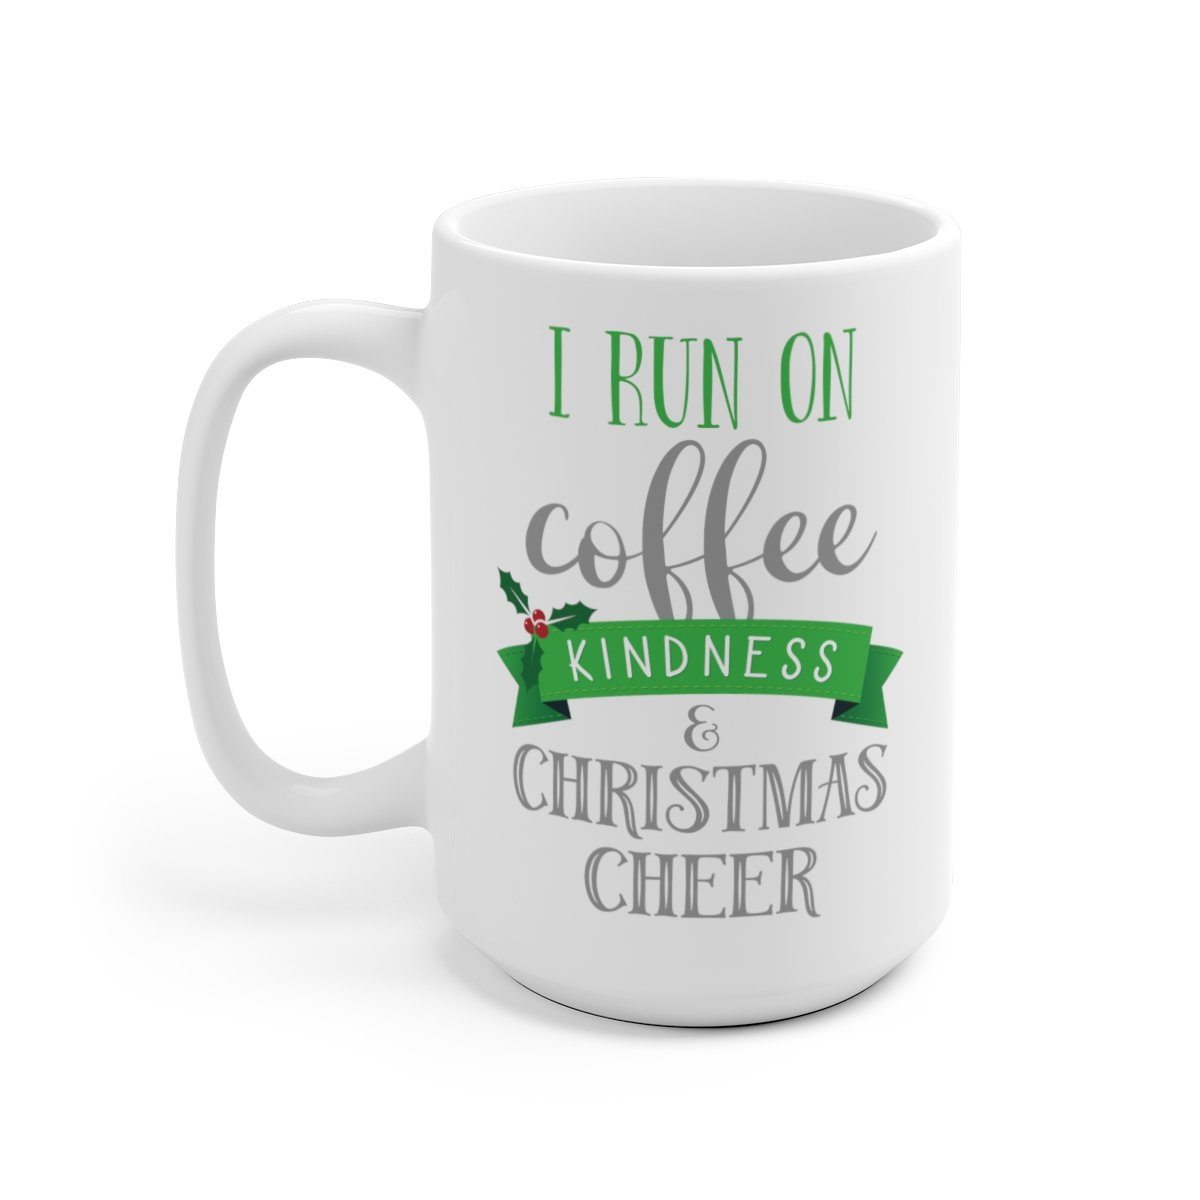 I Run on Coffee, Kindness & Christmas Cheer Coffee Mugs